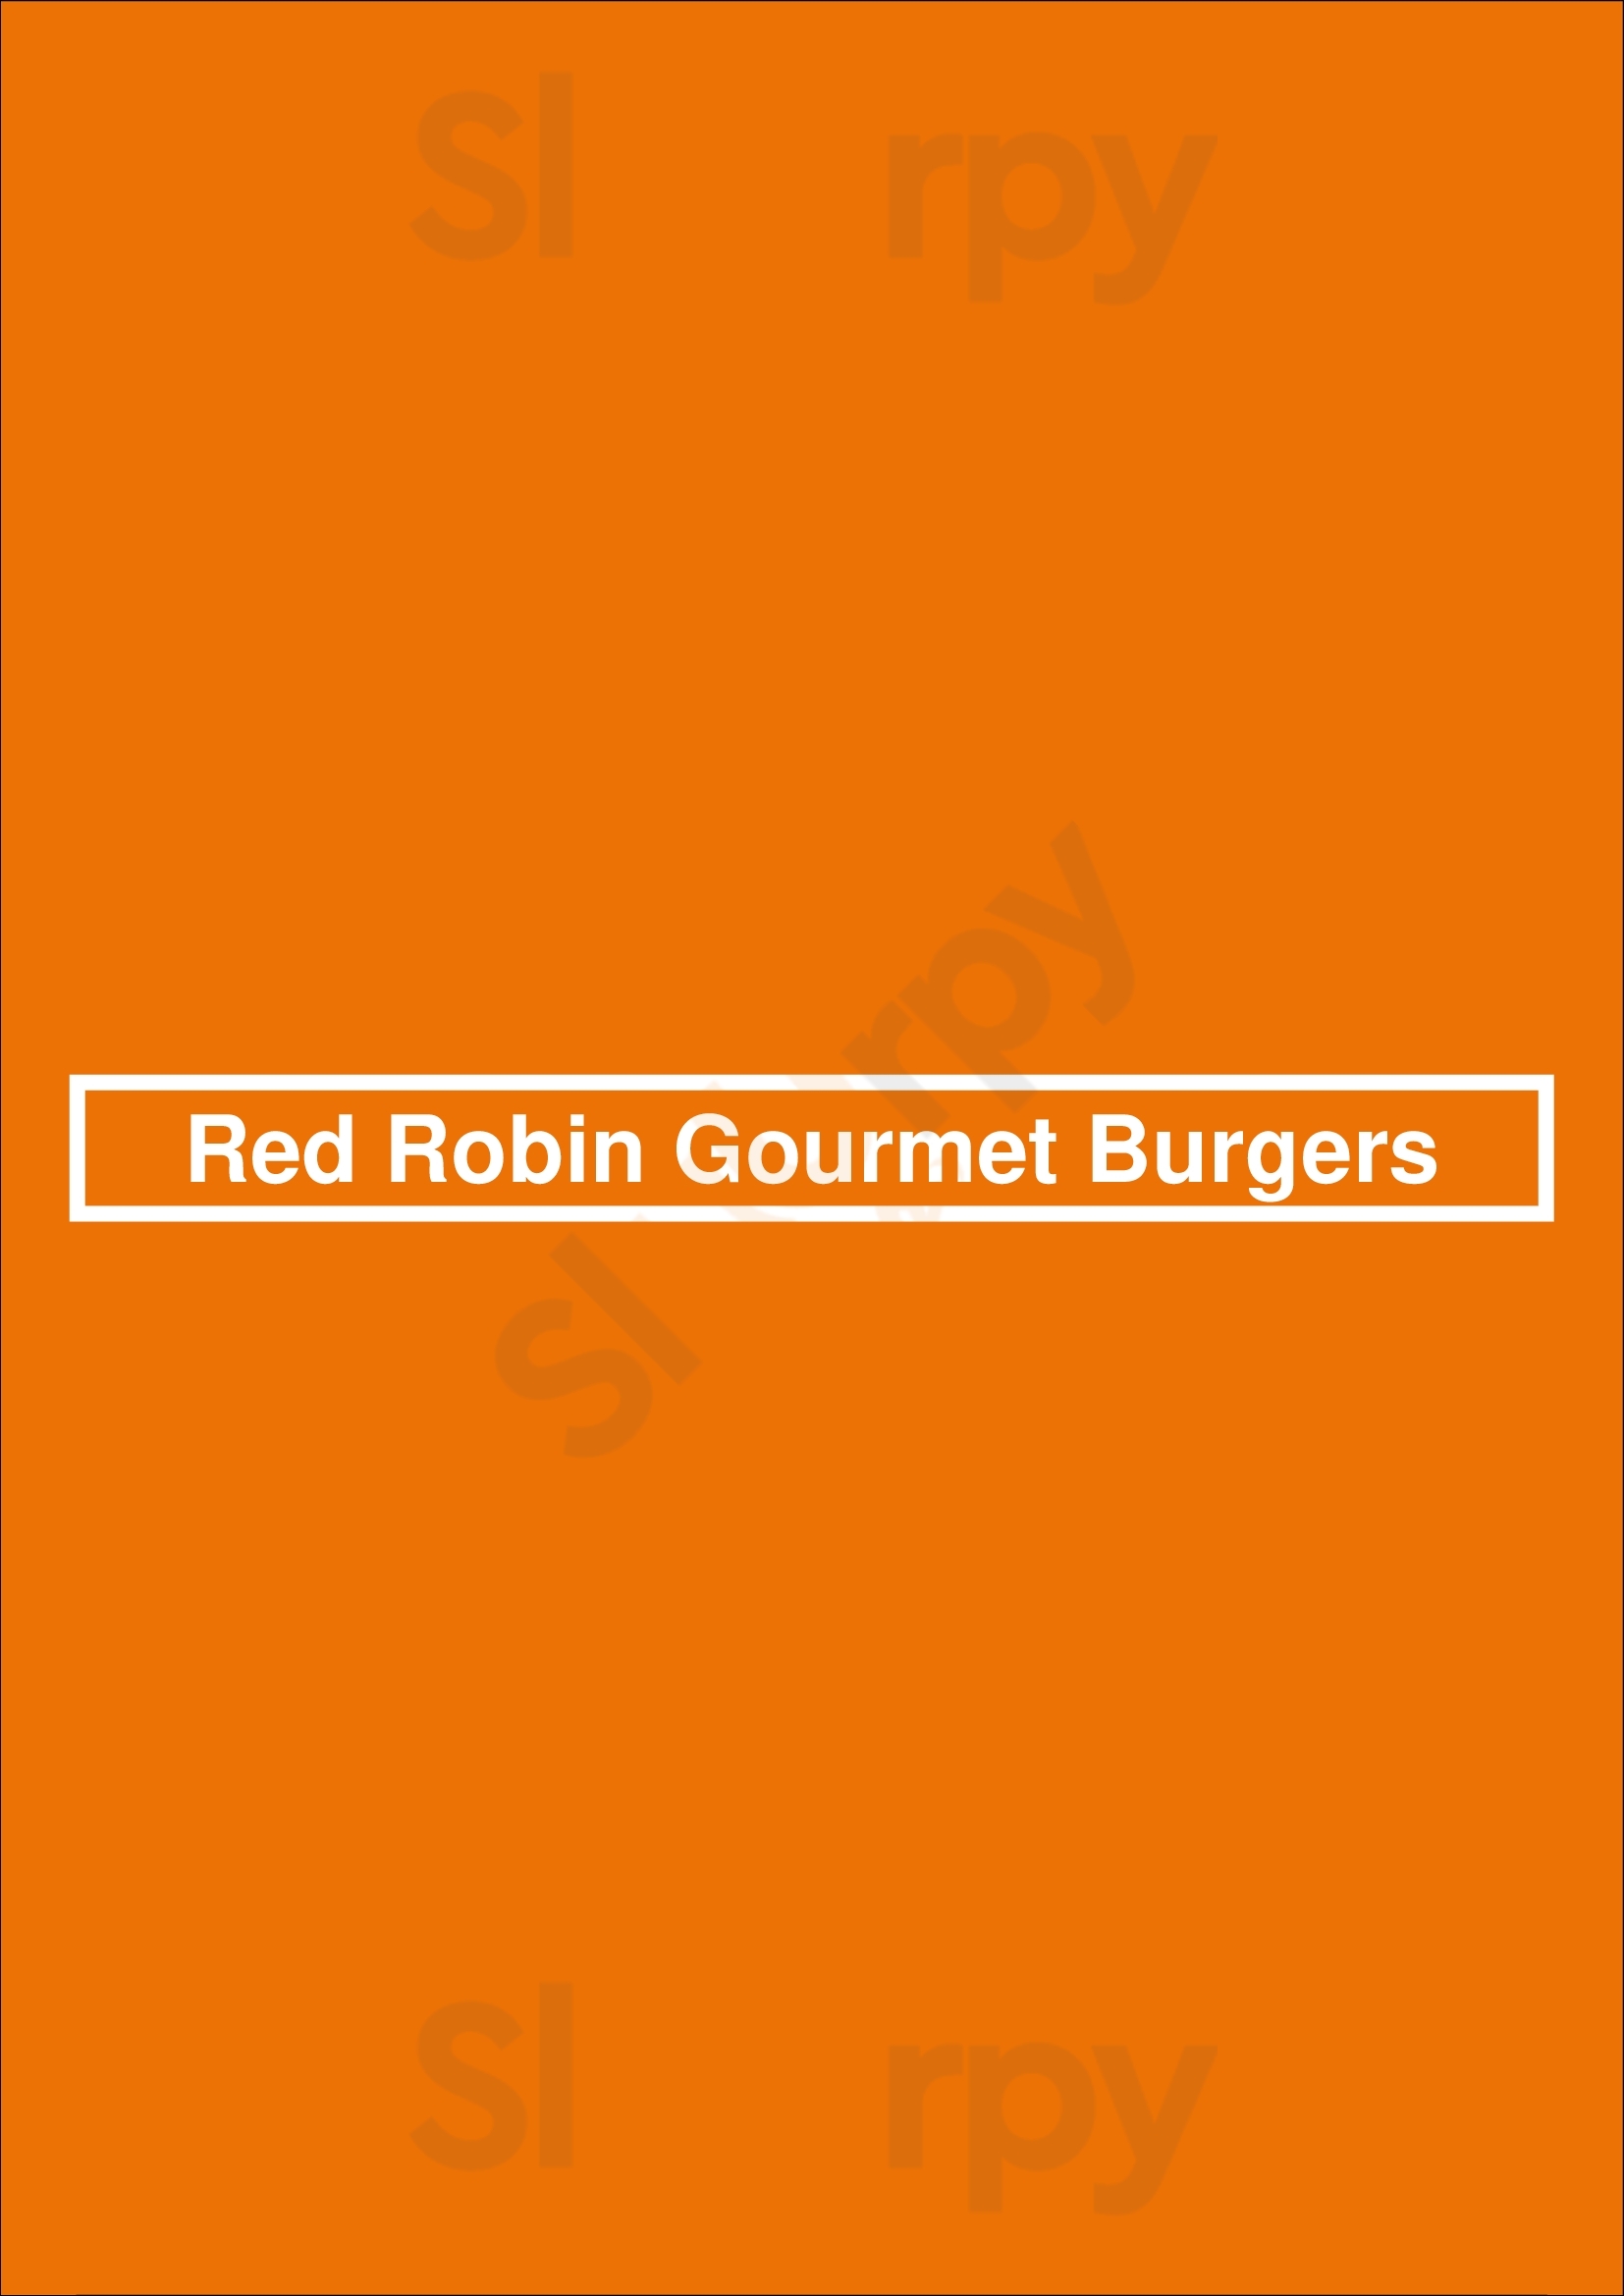 Red Robin Gourmet Burgers Brookfield Menu - 1